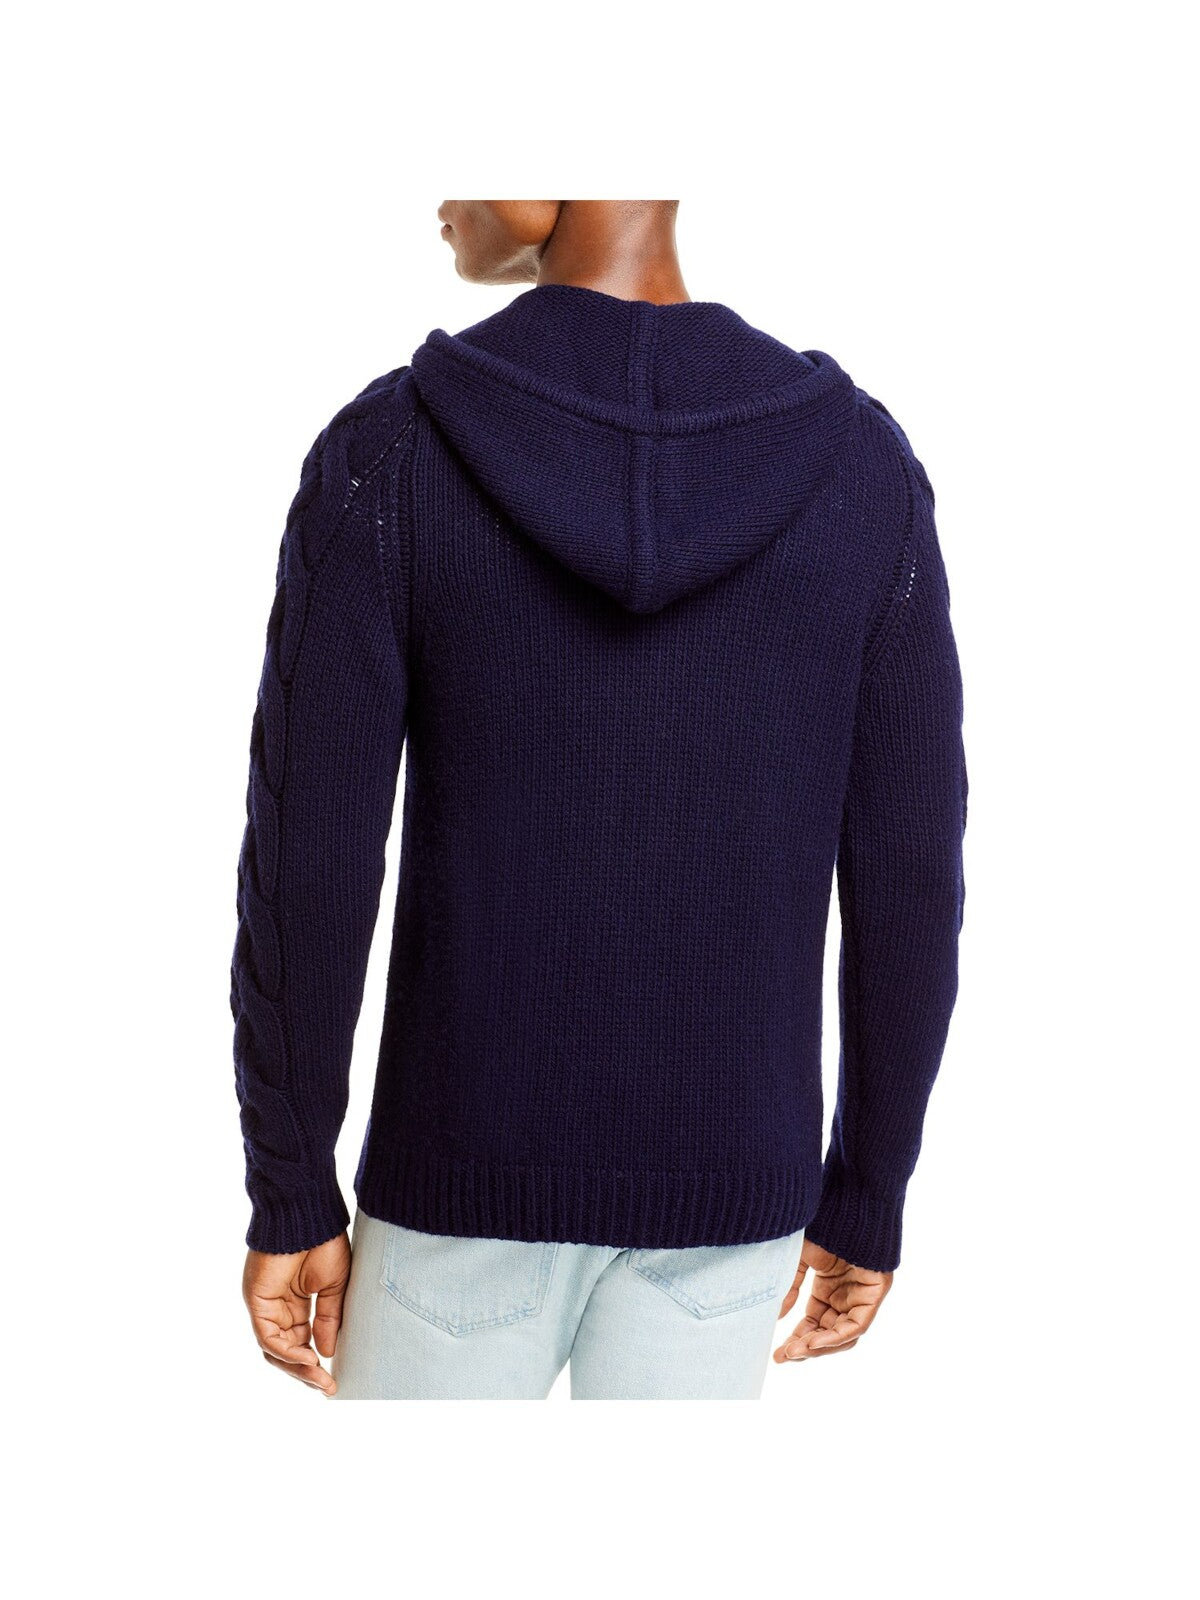 THE MENS STORE Mens Navy Collarless Full Zip Wool Blend Sweater L